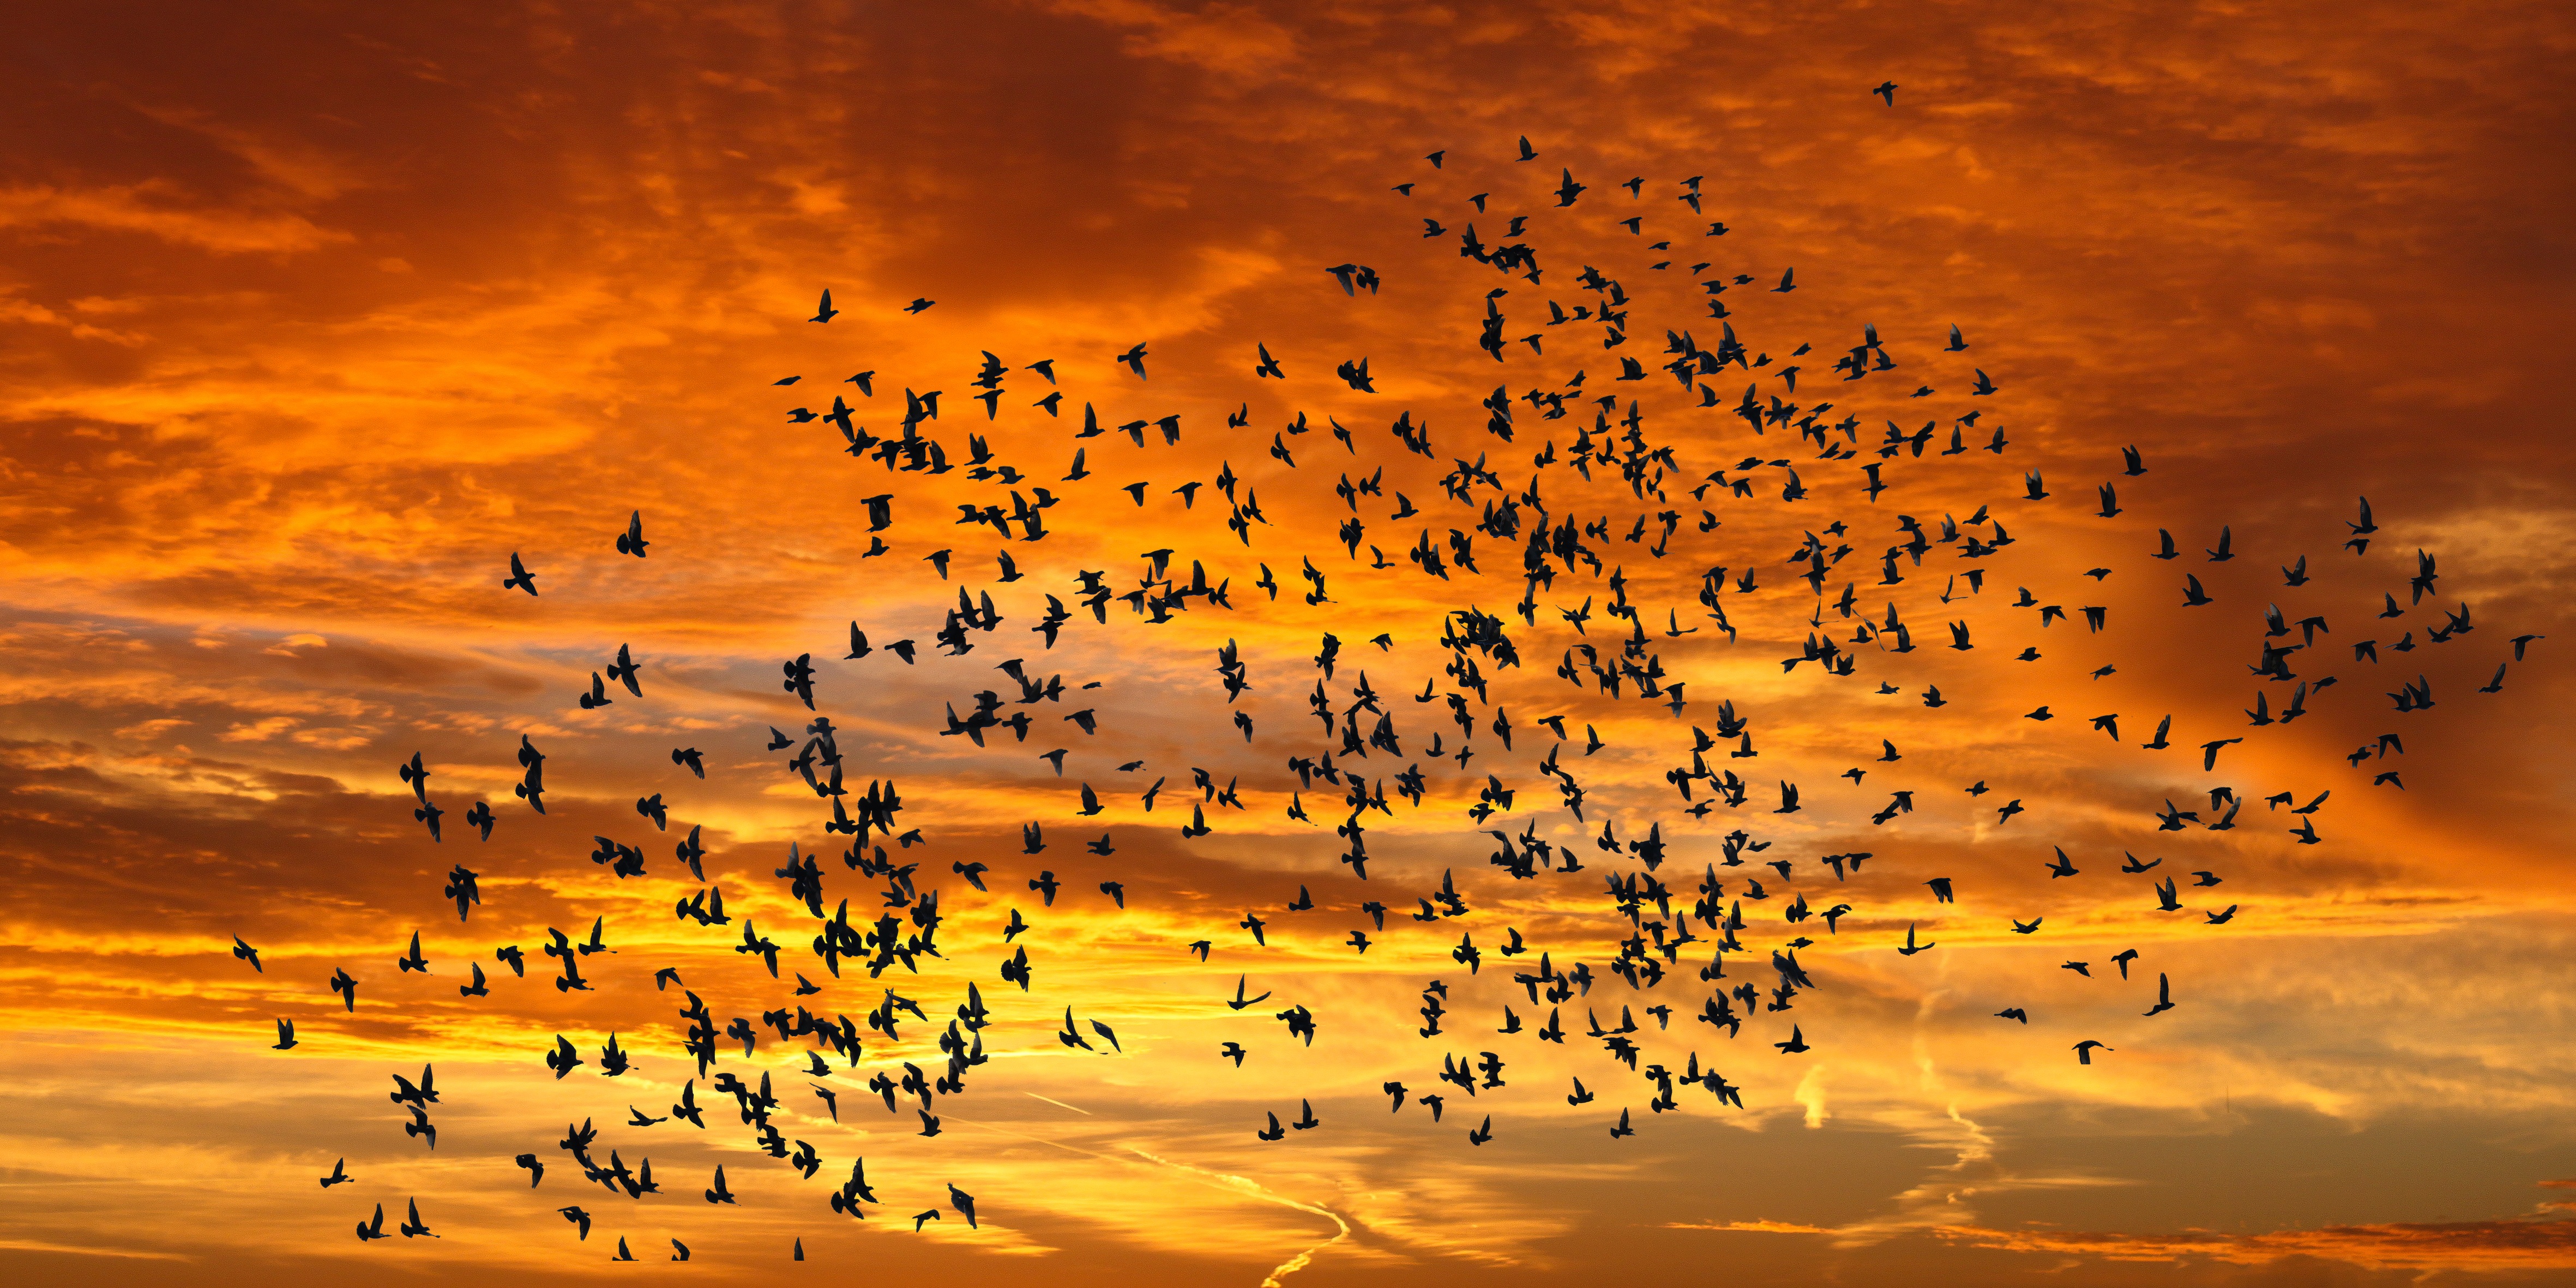 desktop Images sunset, nature, birds, sky, clouds, silhouettes, flight